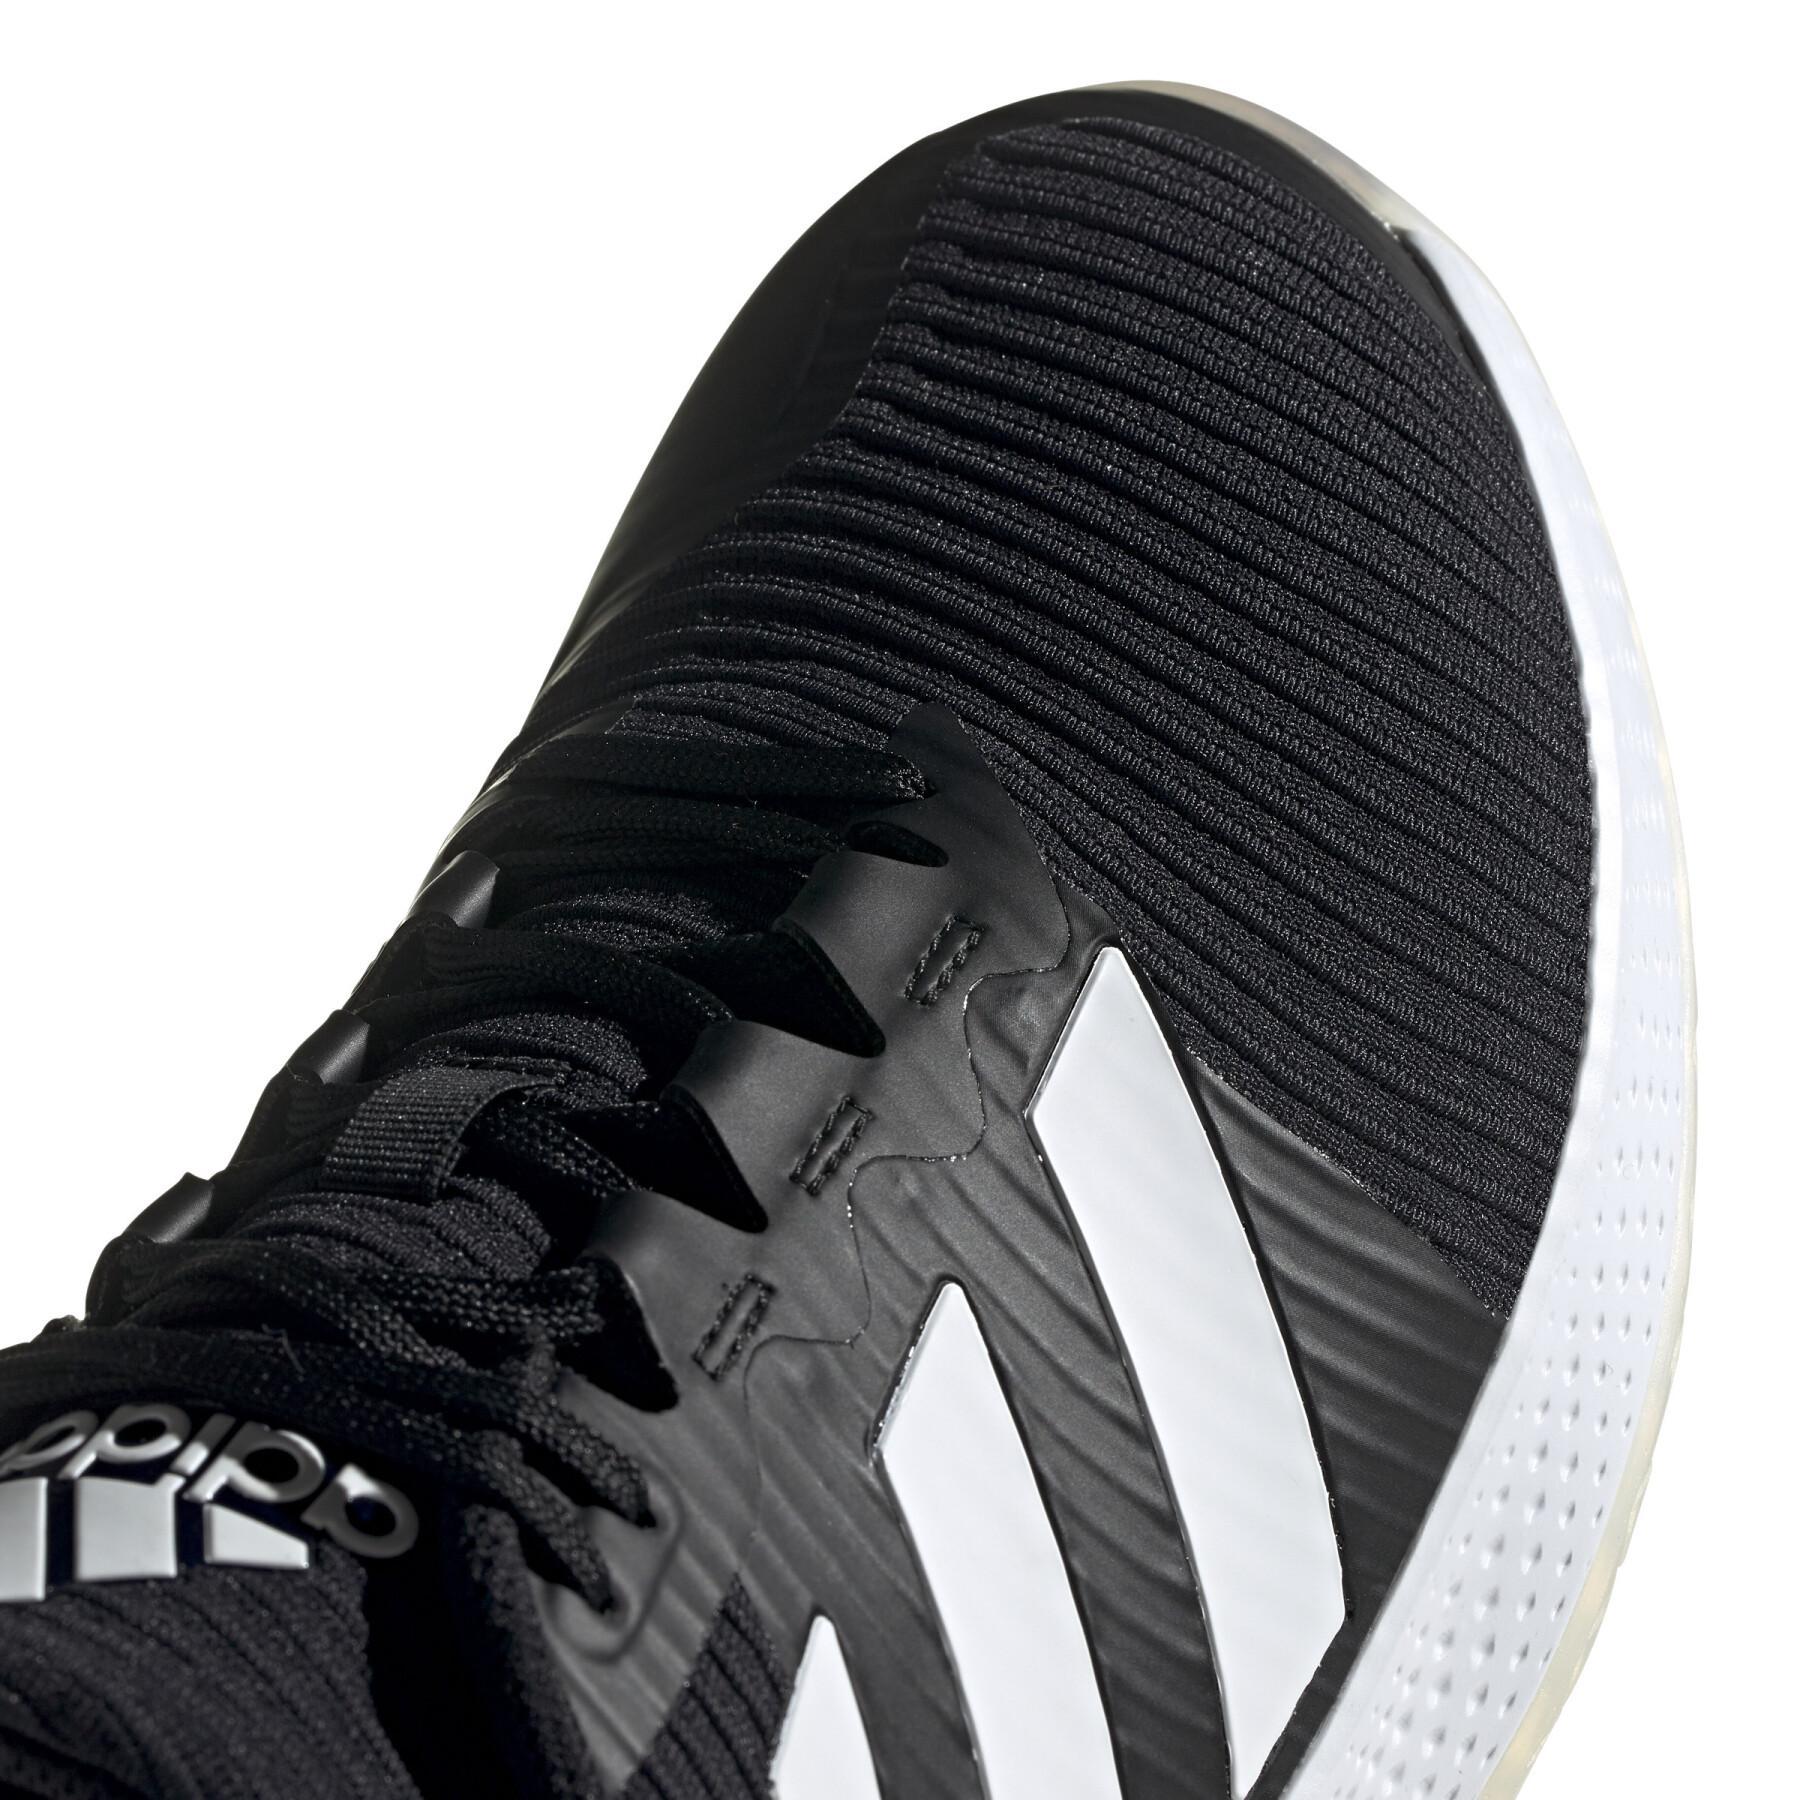 Chaussures adidas ForceBounce Handball